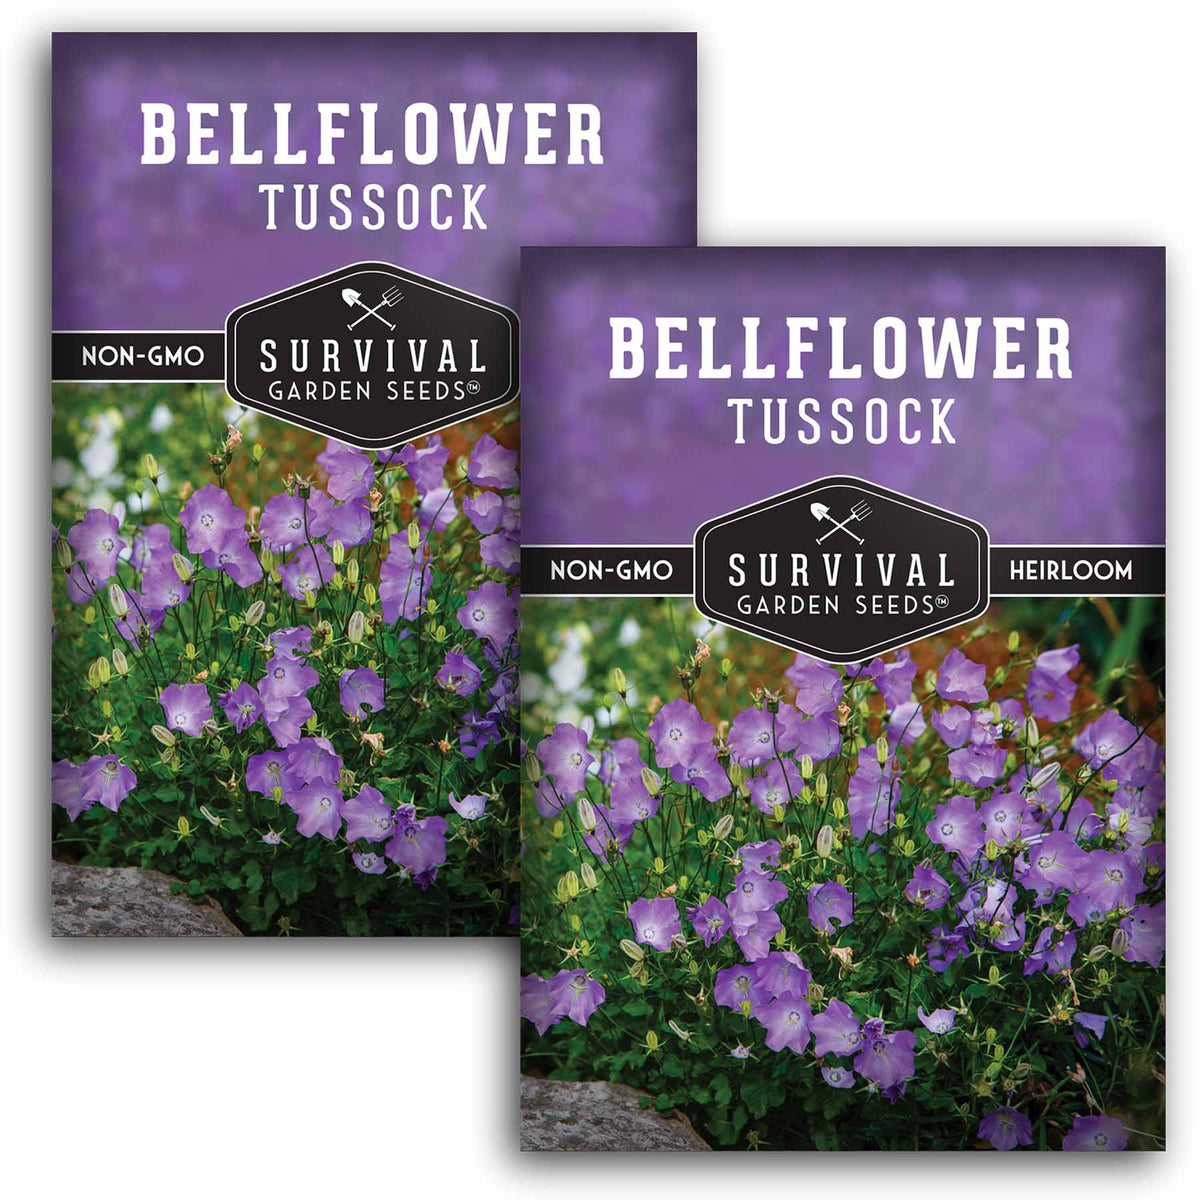 2 packets of Tussock Bellflower seeds